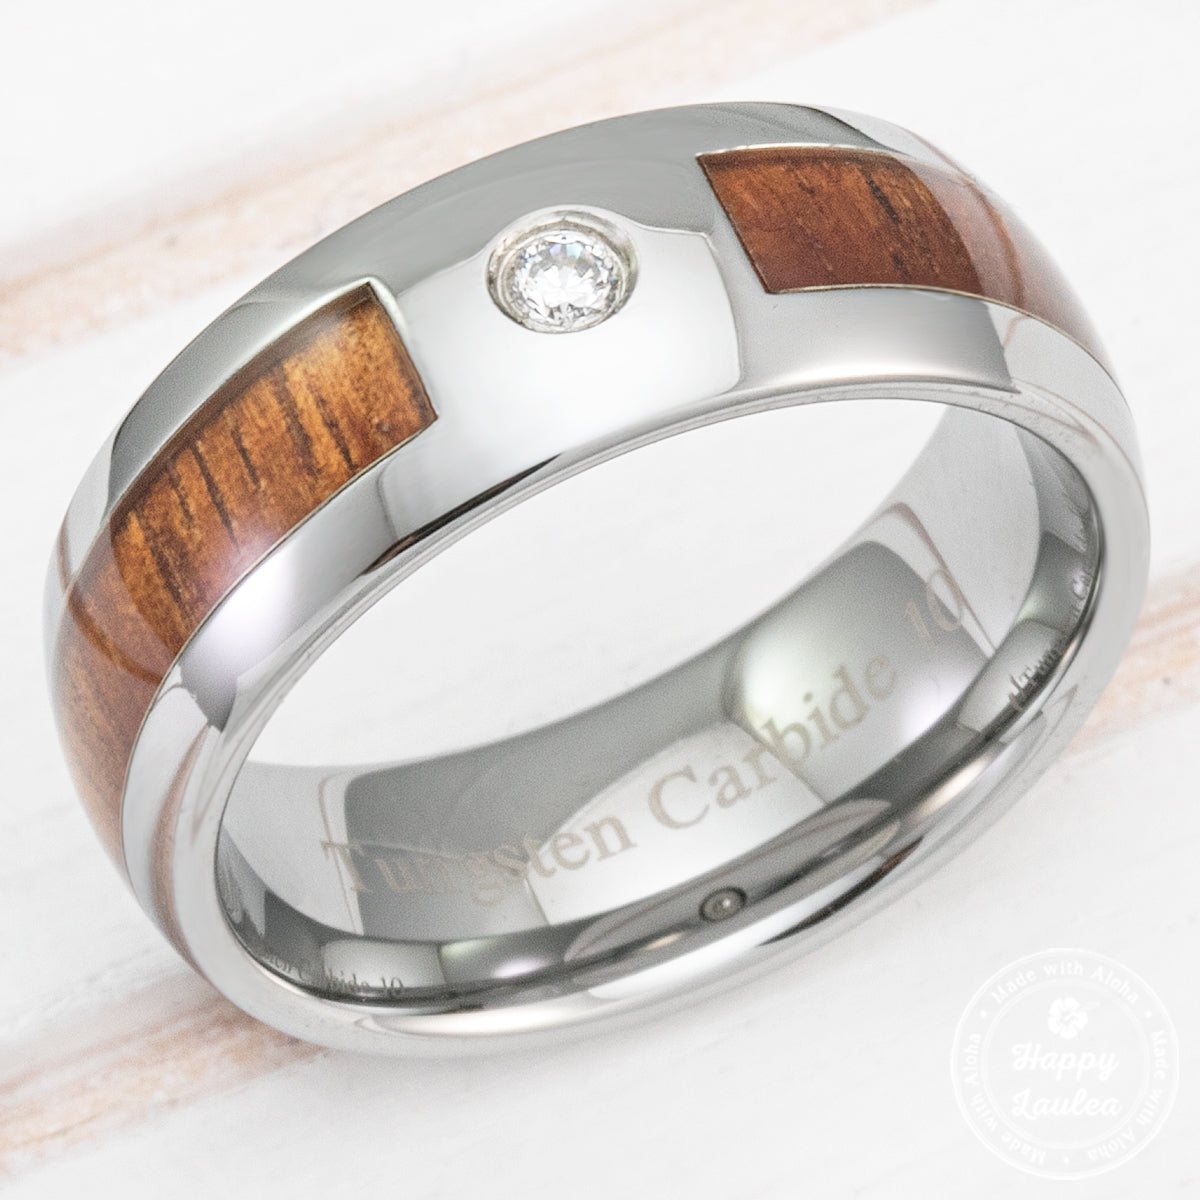 Tungsten Carbide Cubic Zirconia Ring with Hawaiian Koa Wood Inlay - 8mm, Dome Shape, Comfort Fitment